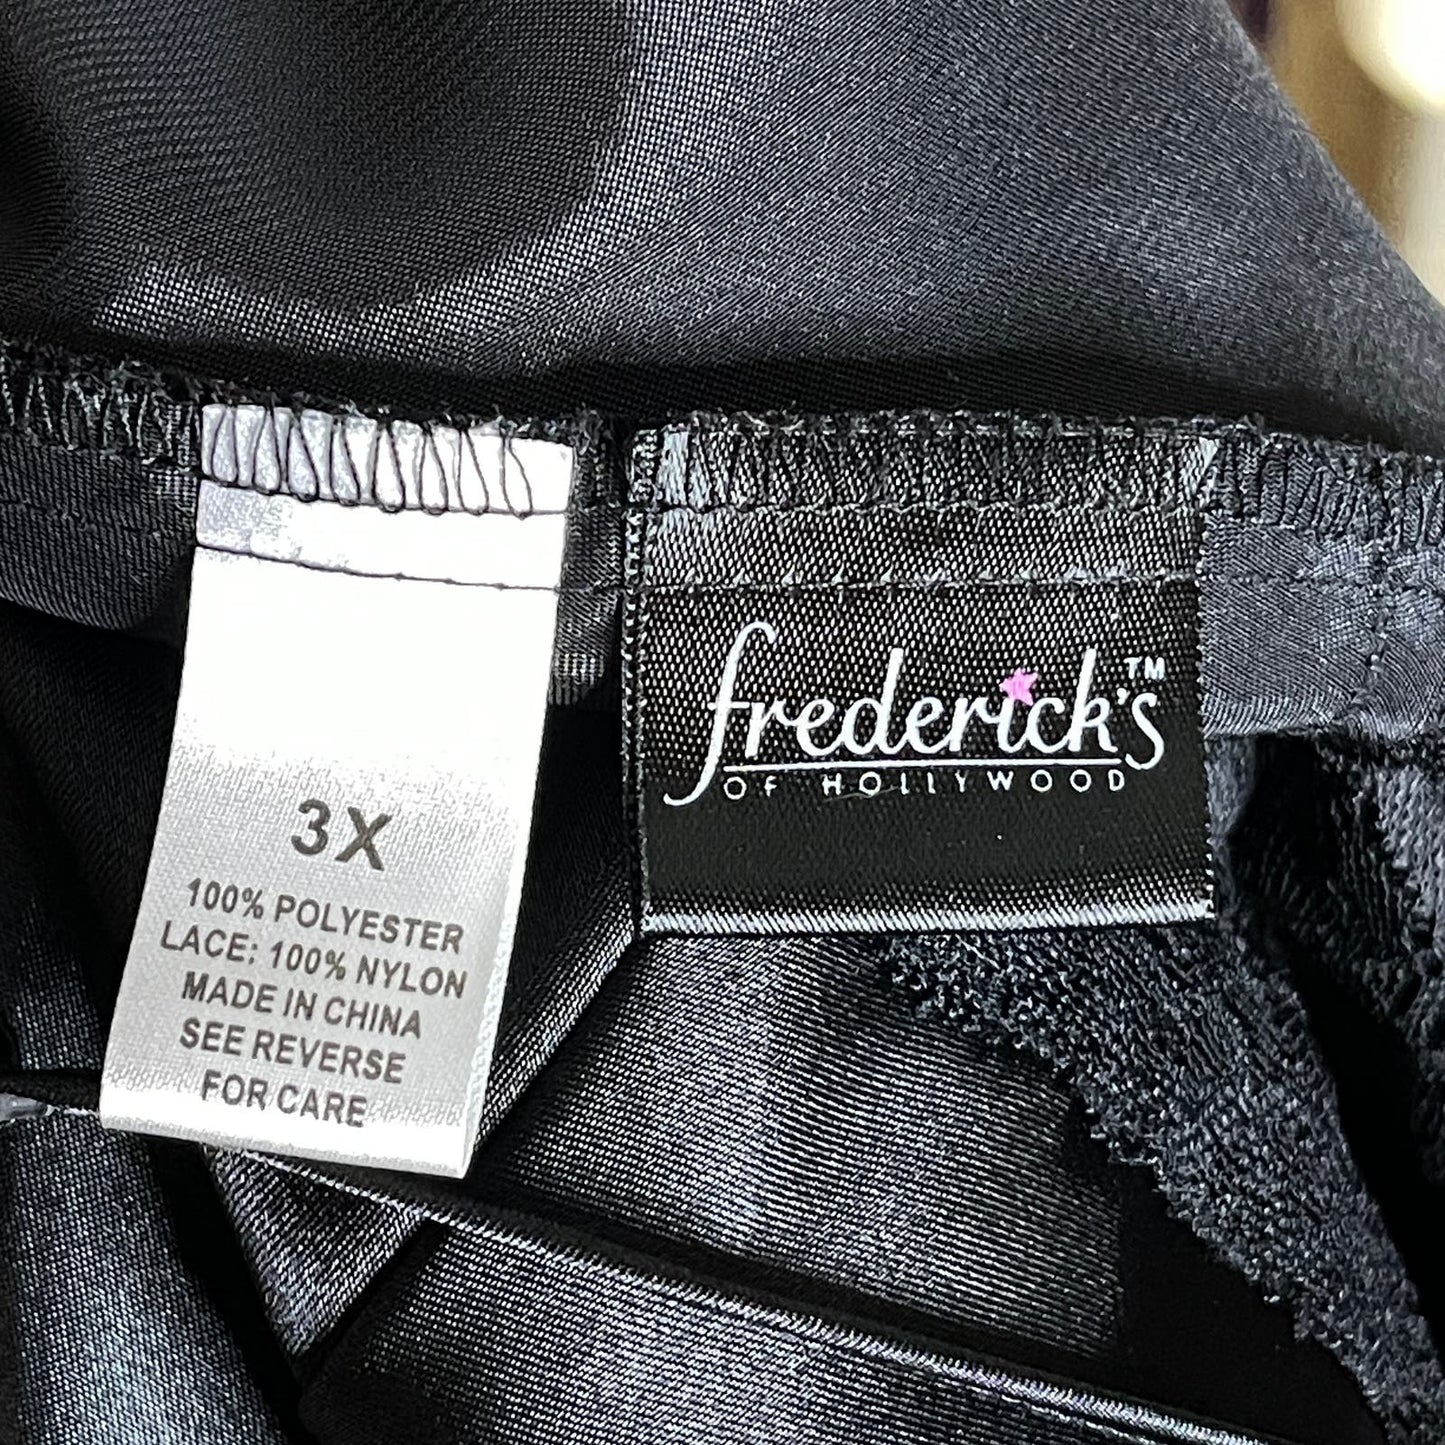 Fredericks of Hollywood Black Satin Nightie Slip Dress Lace Trim Volup Size 3X